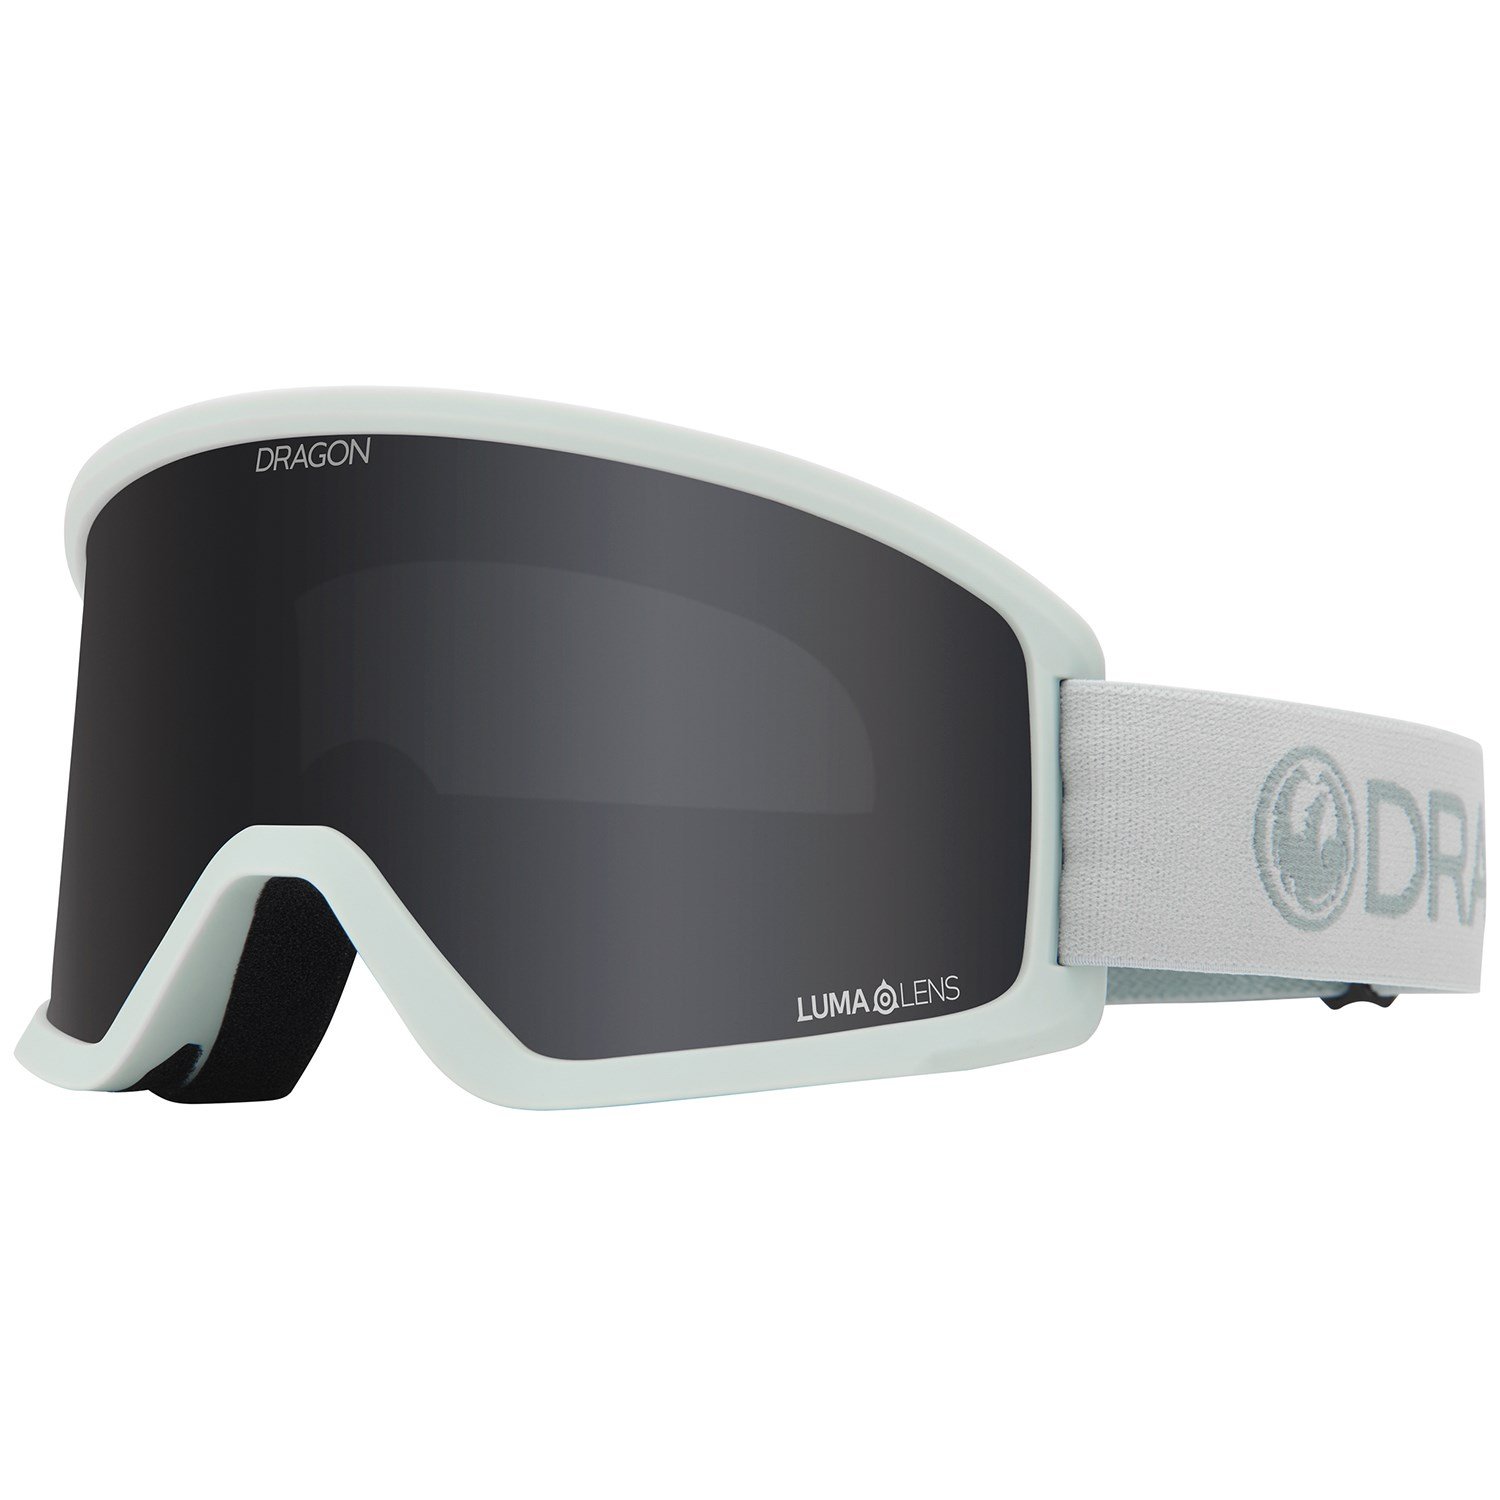 DRAGON DX3 OTG Asian Fit Goggle Premium LumaLens NEW Alernative Fit Warranty 